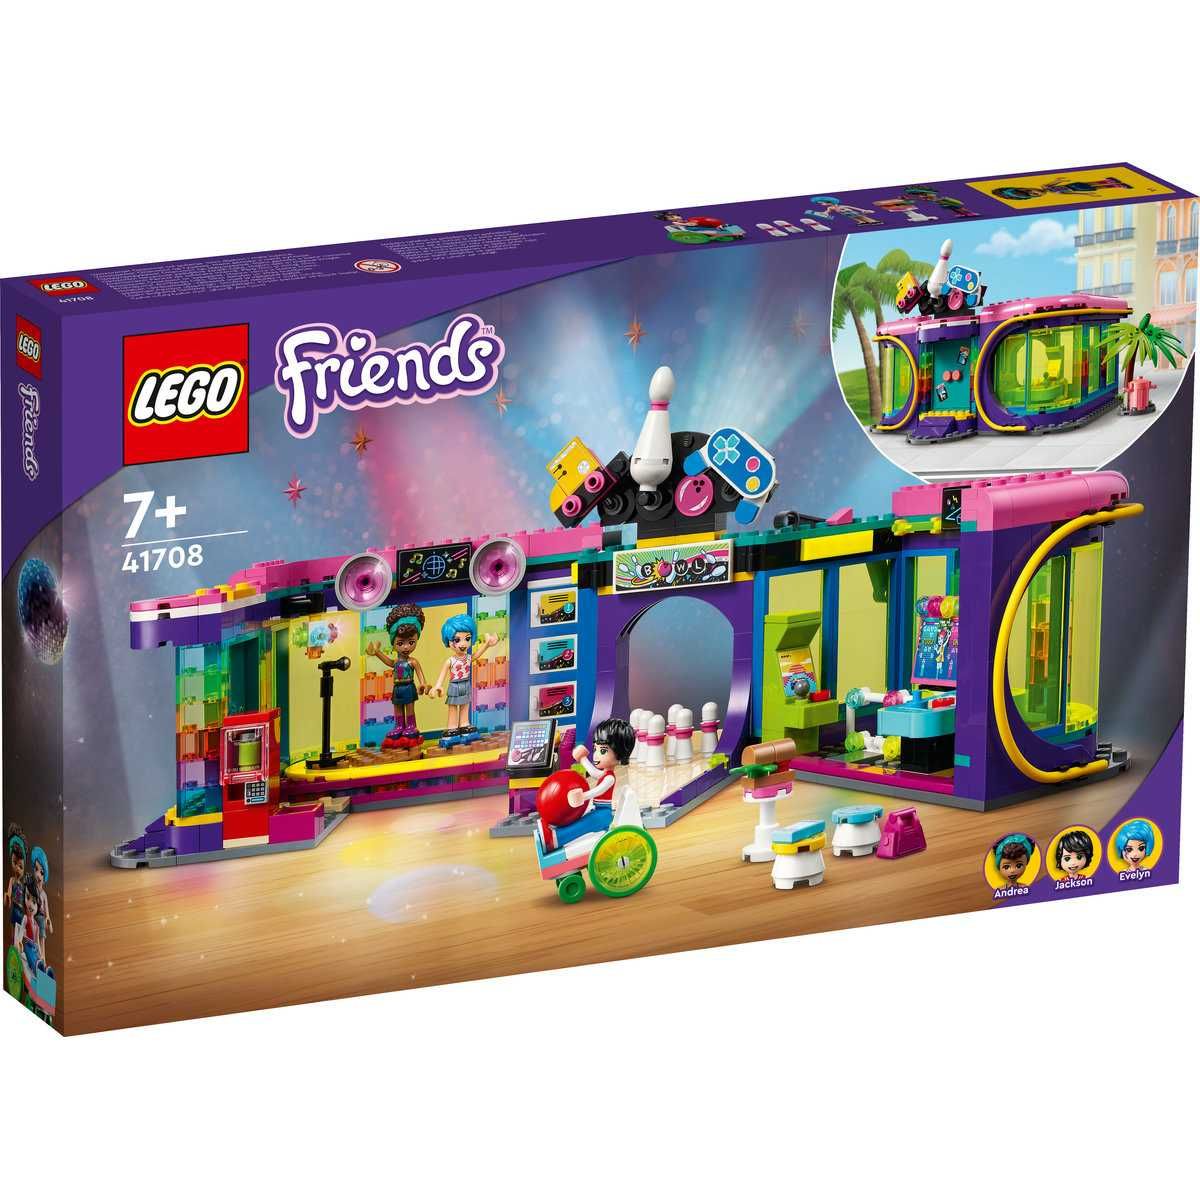 Lego friends Galeria disco cu jocuri electronice7+,642pcs, fara cutie